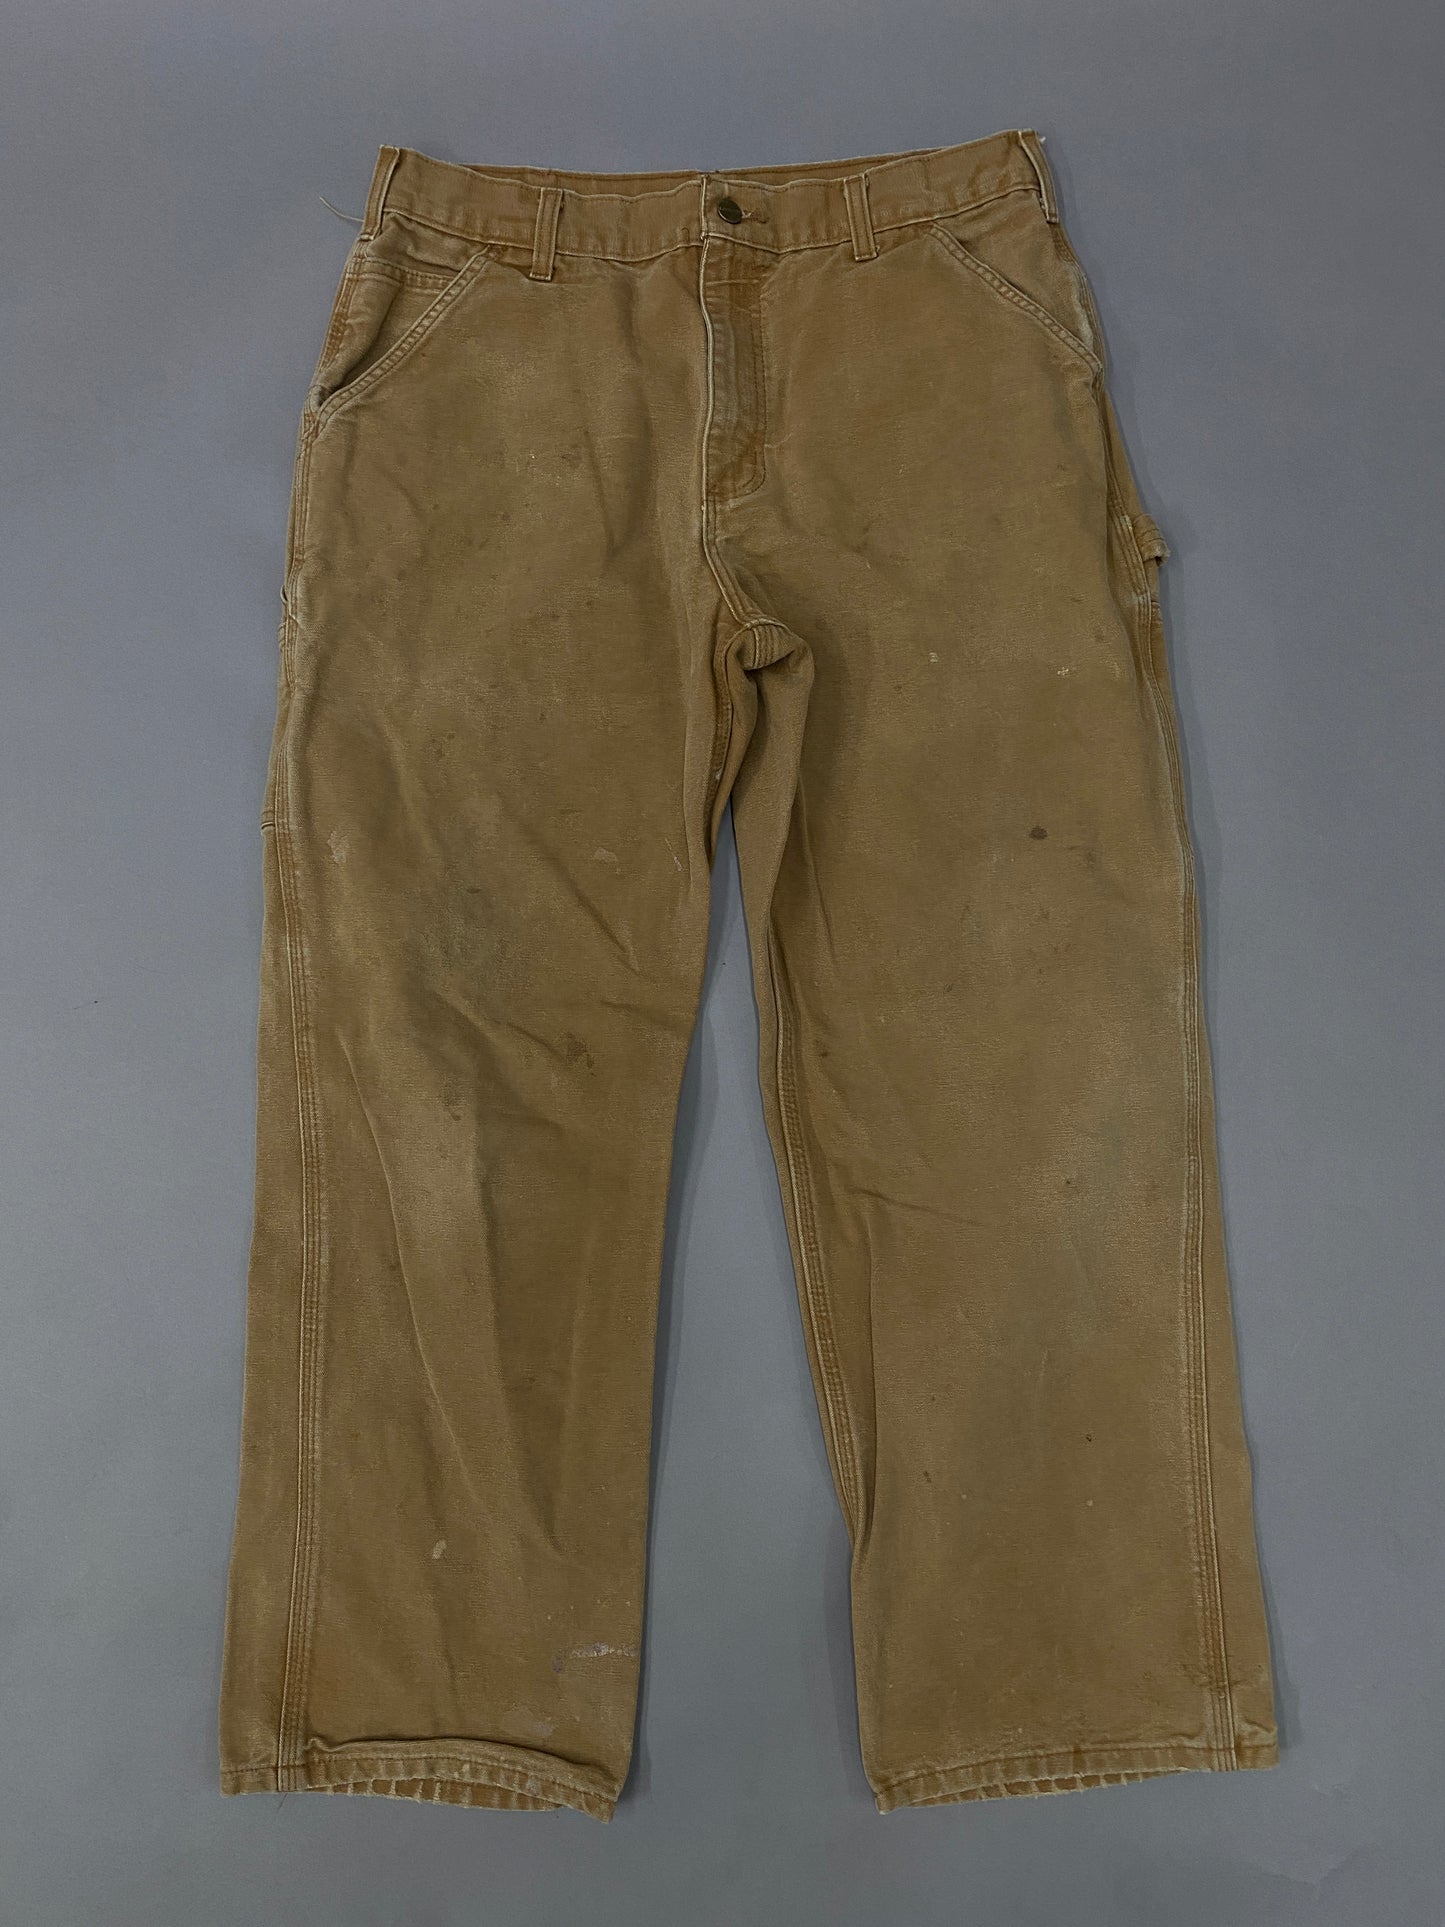 Carhartt Vintage Carpenter Jeans - 32